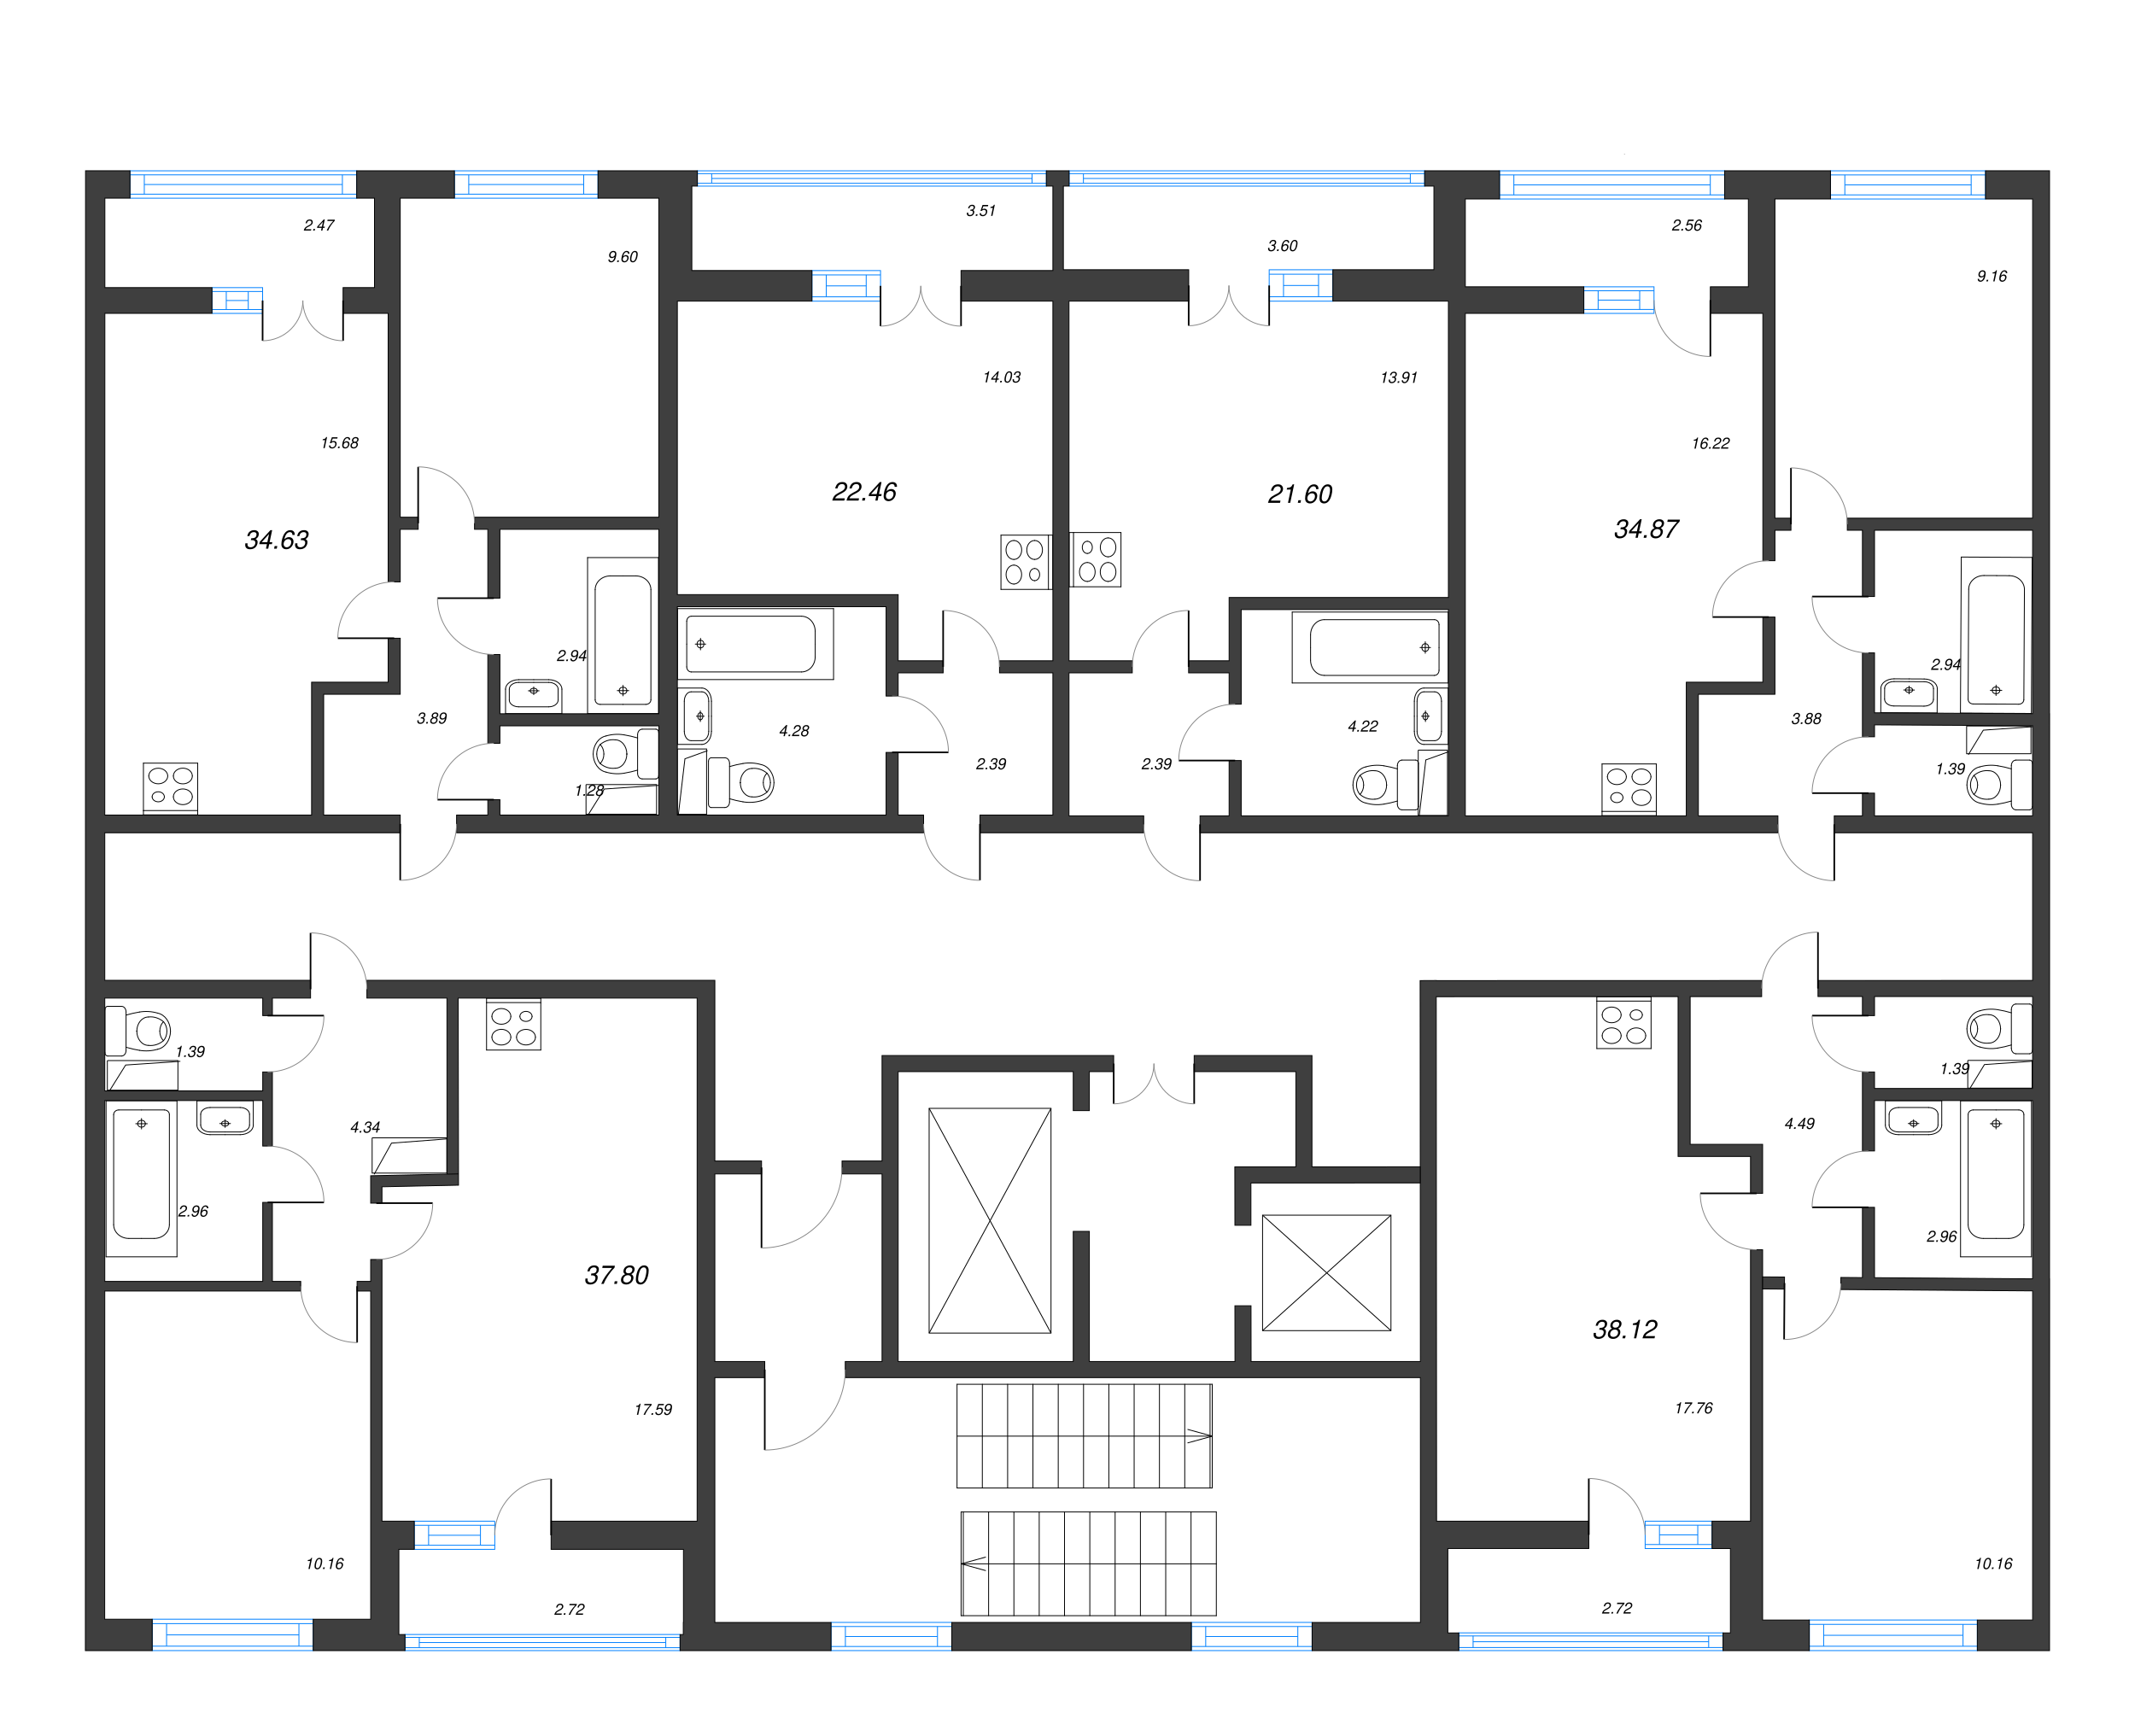 2-комнатная (Евро) квартира, 38.12 м² - планировка этажа